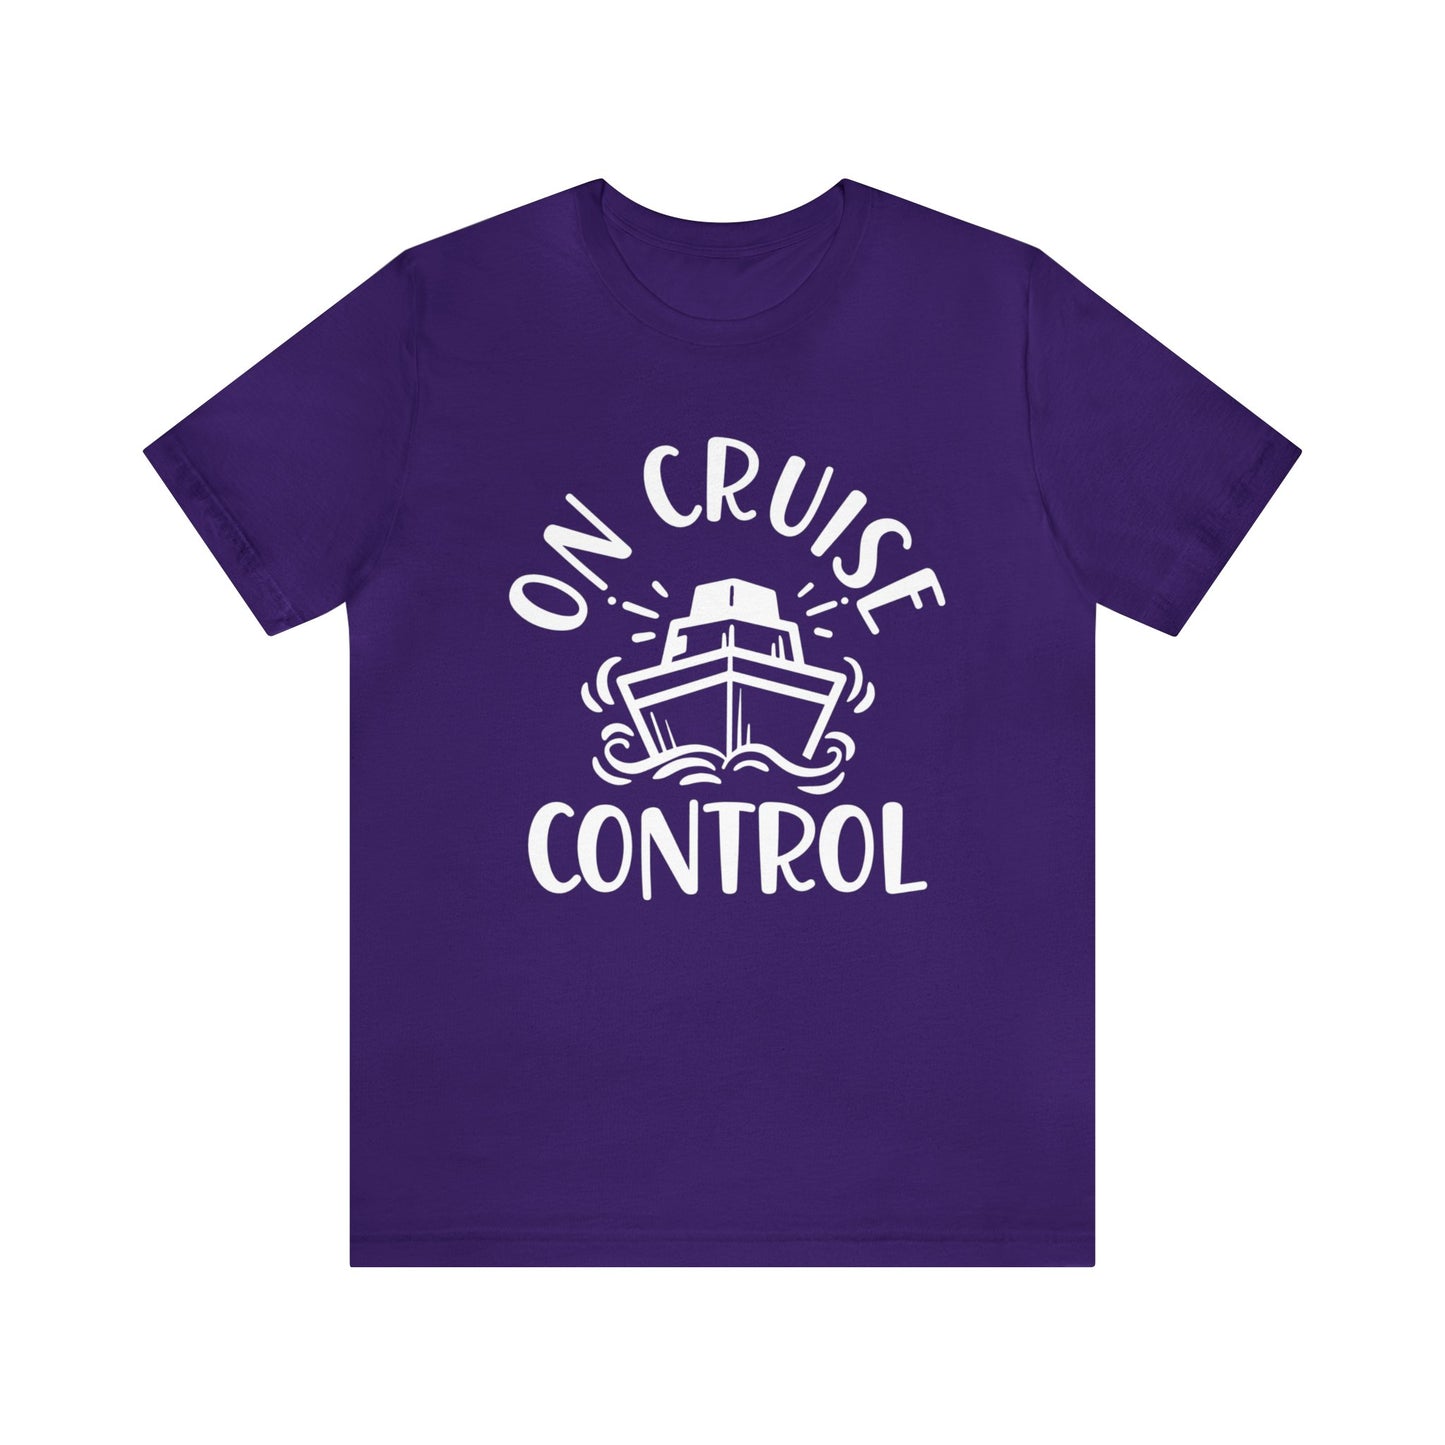 On Cruise Control in Team Purple